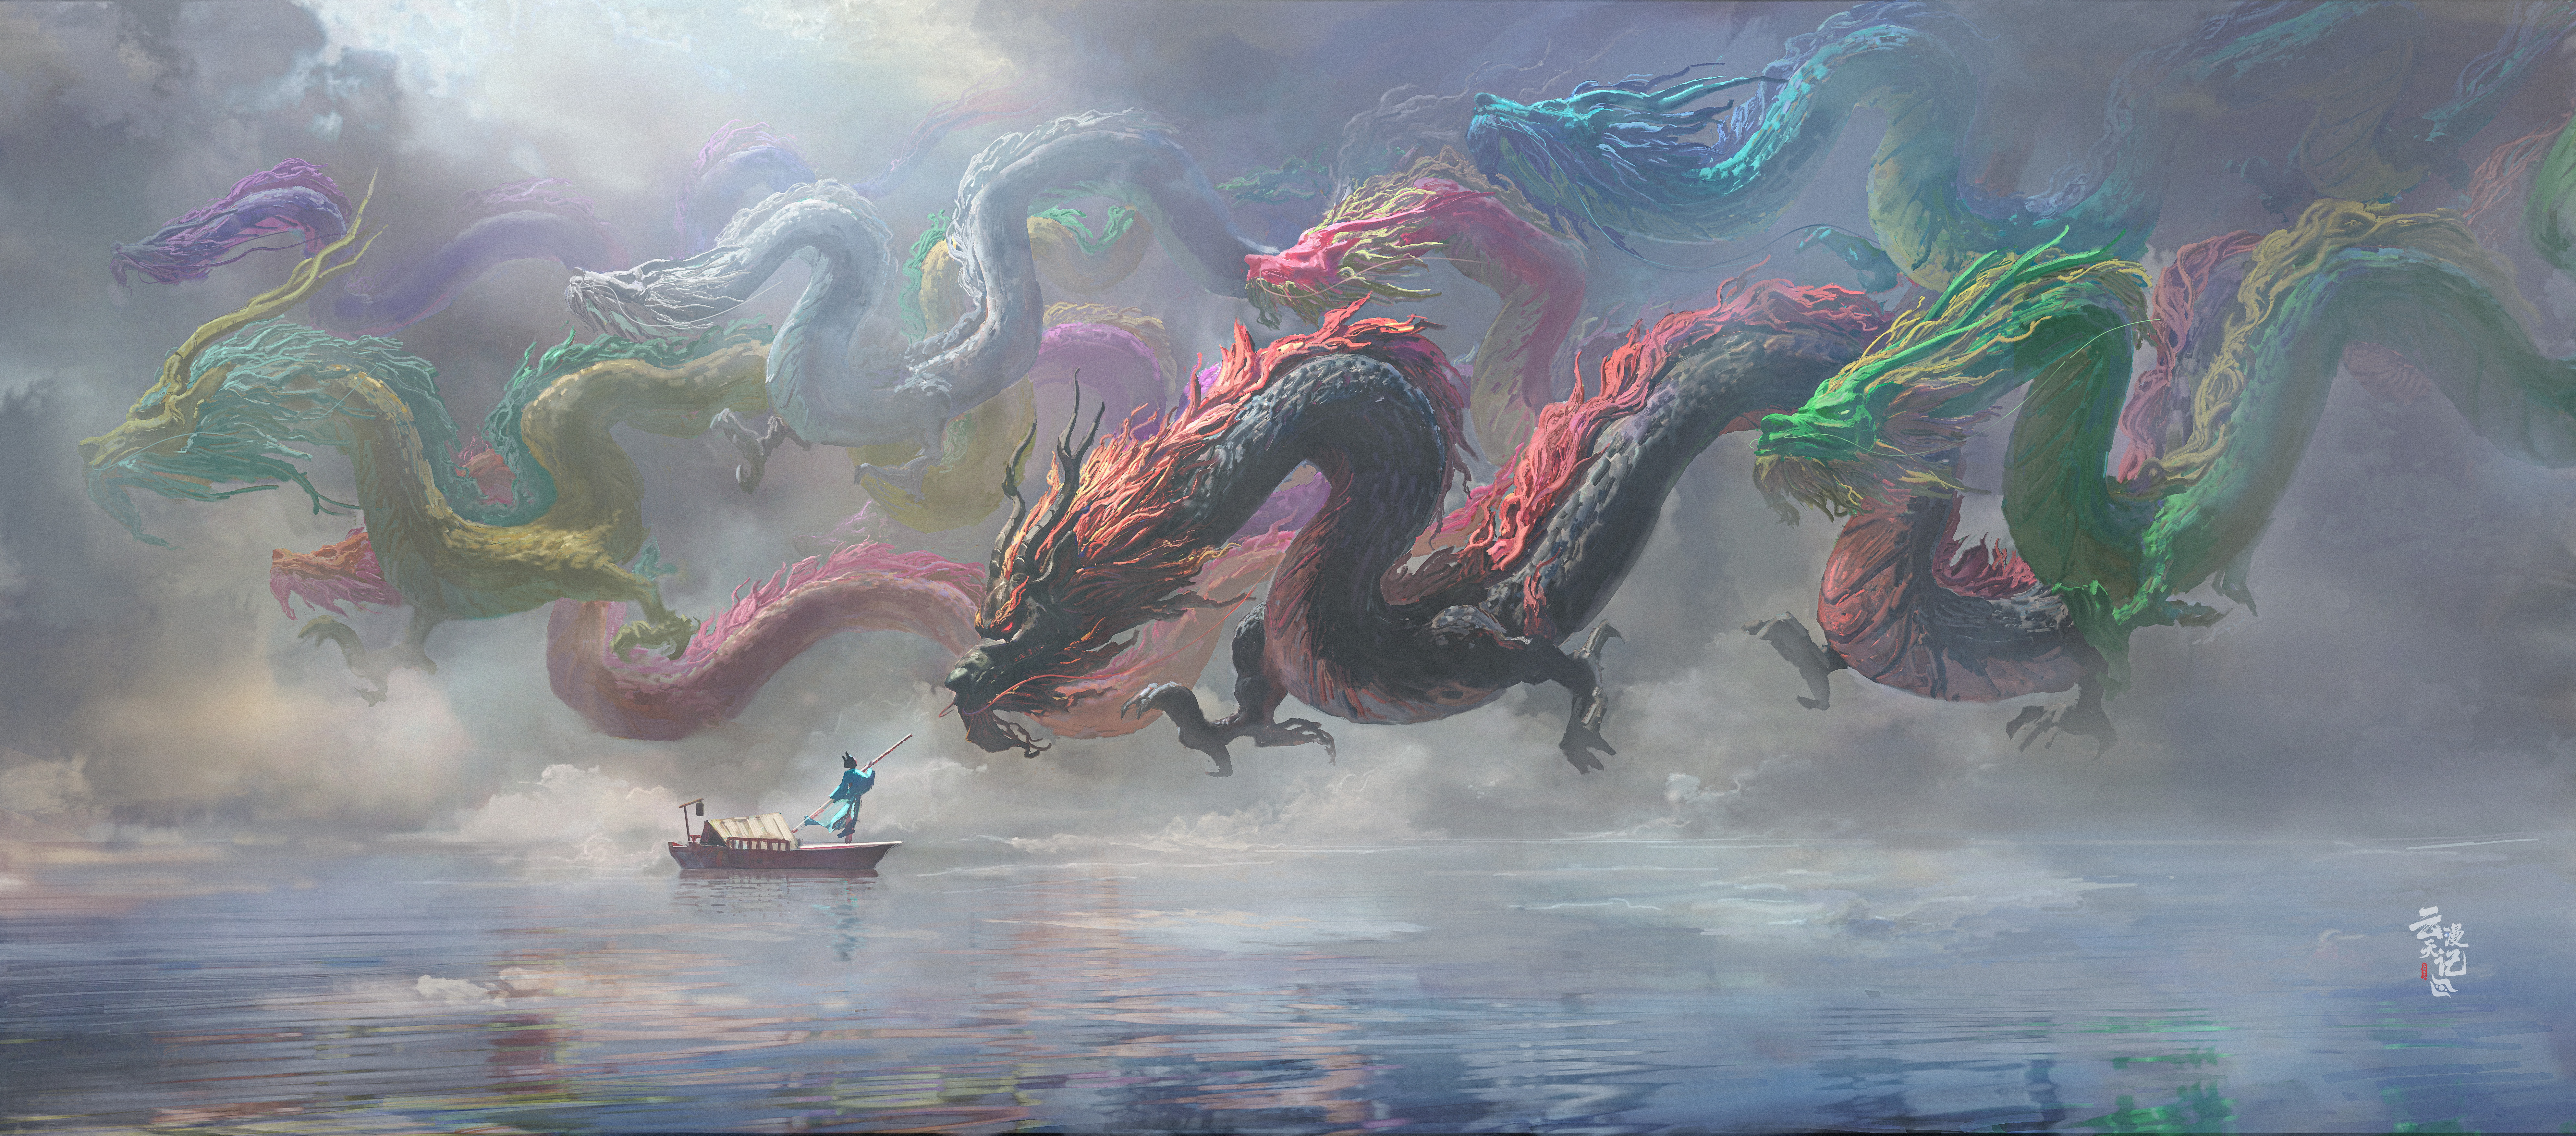 Chibaolin Digital Art Artwork Illustration Fantasy Art Dragon Animals Sea Boat Water Wide Screen Wat 7939x3500